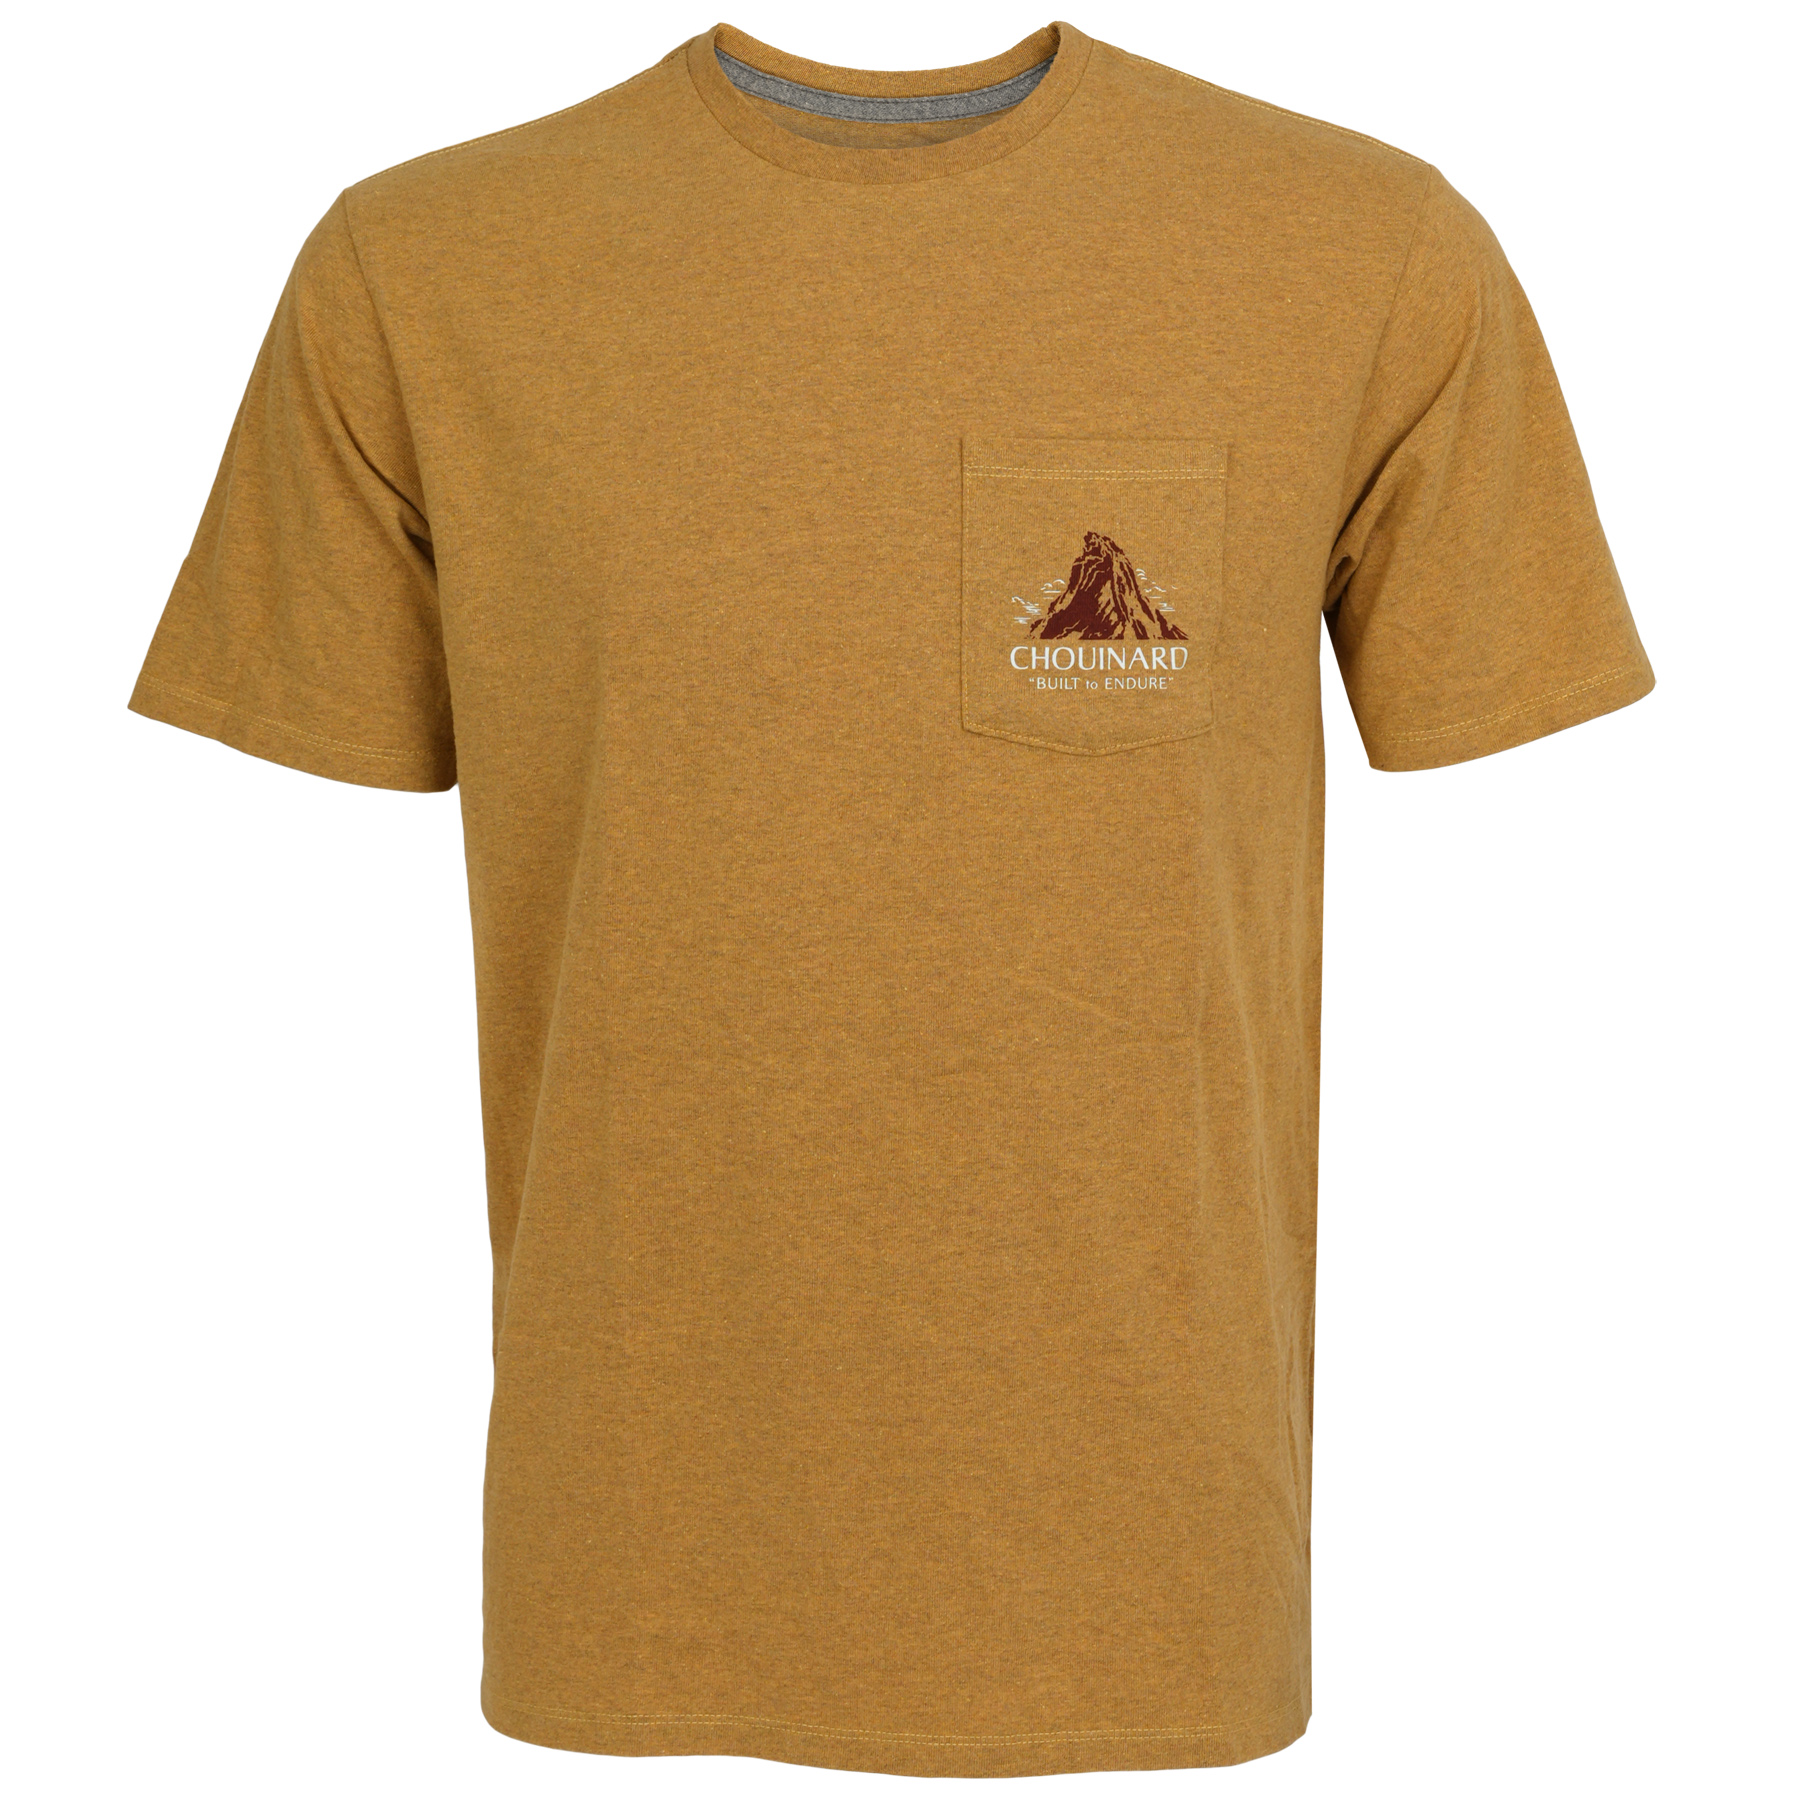 Productfoto van Patagonia Chouinard Crest Pocket Responsibili-Tee T-Shirt Heren - Pufferfish Gold